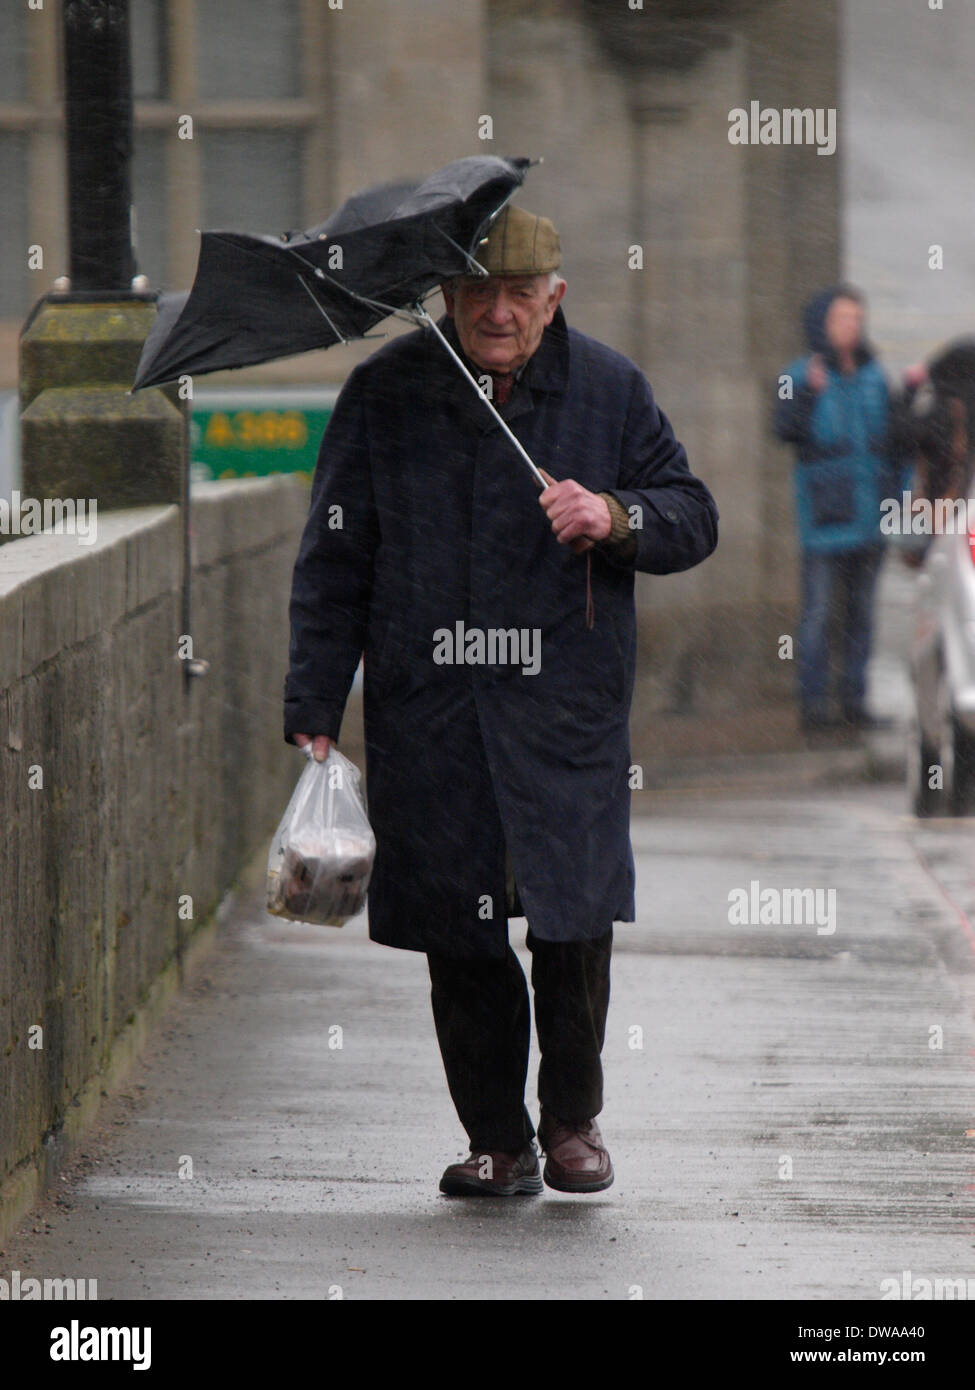 Old man with broken umbrella in the rain and wind, Bideford, Devon, UK Stock Photo